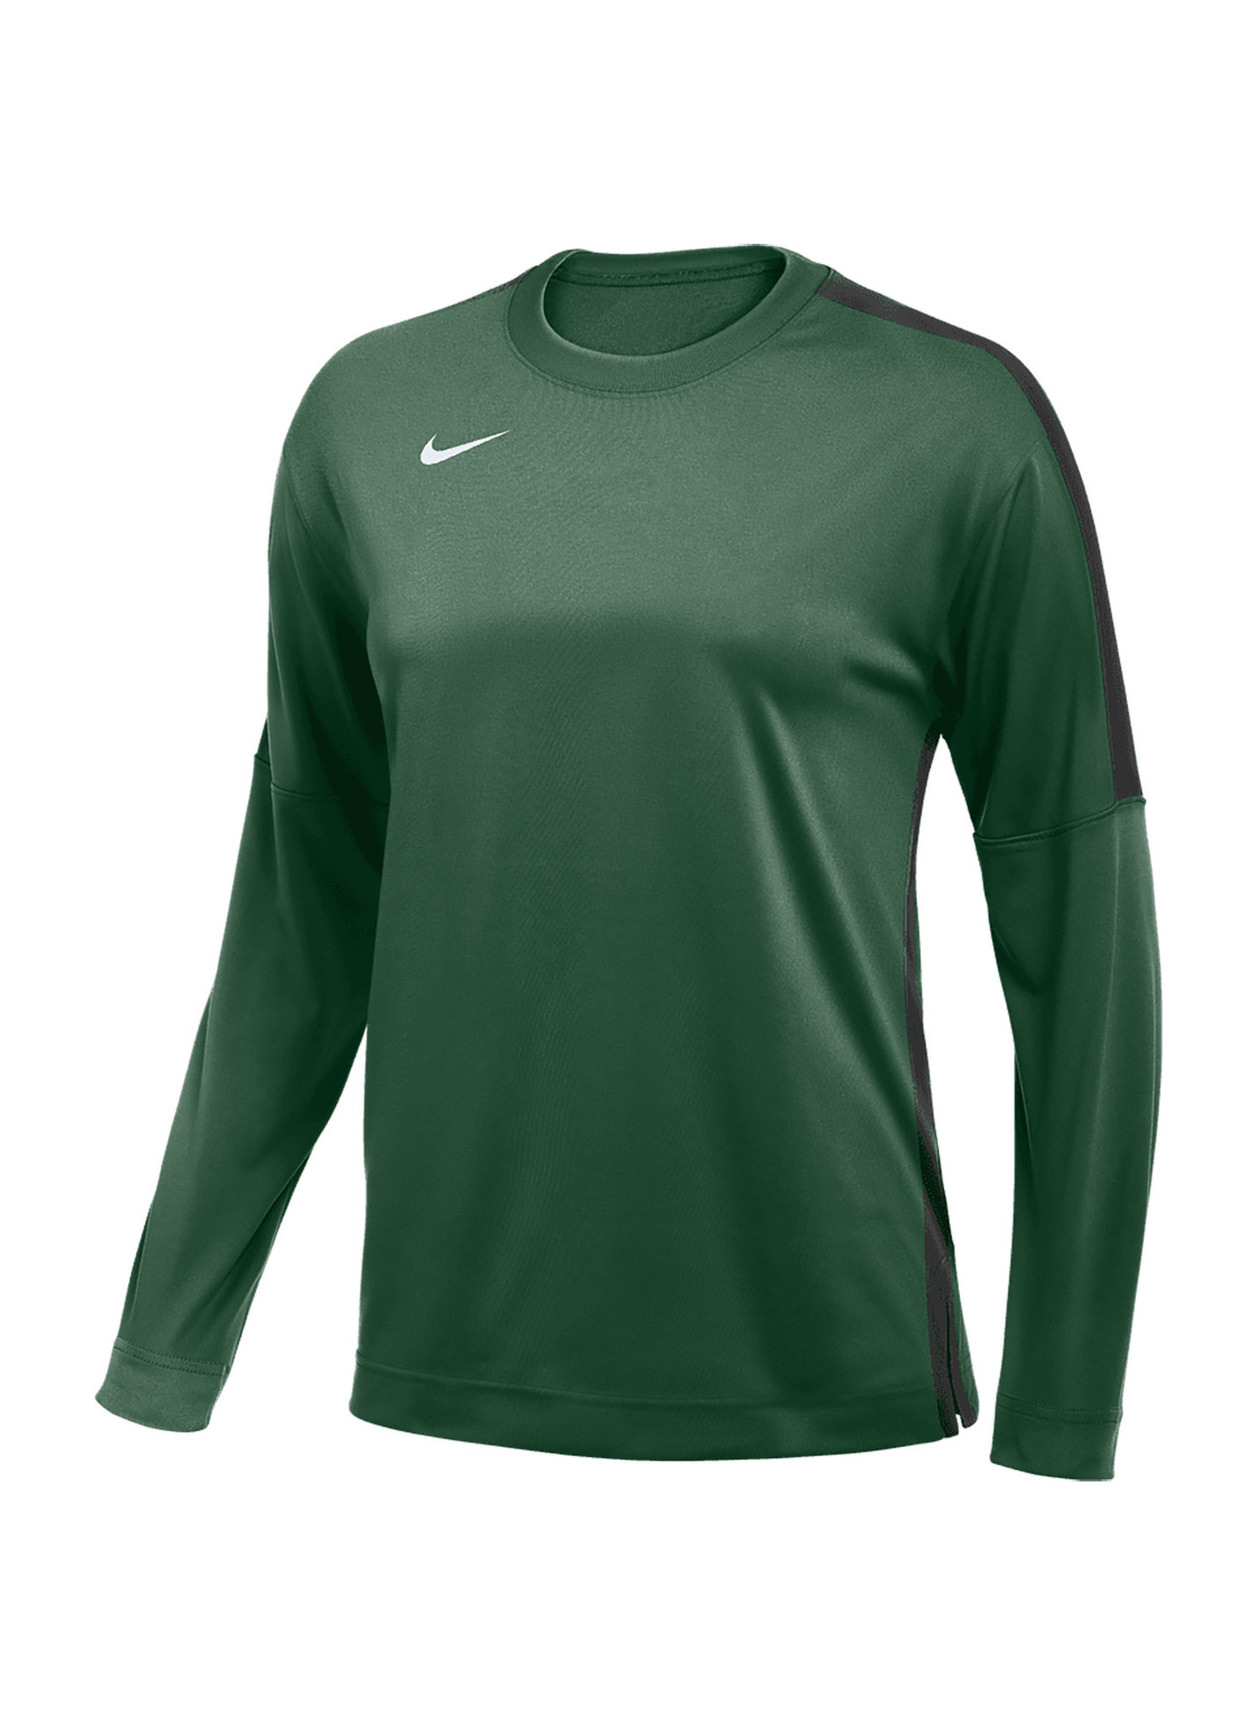 Nike Women's Team Dark Green / Team Black Shooting Long-Sleeve T-Shirt